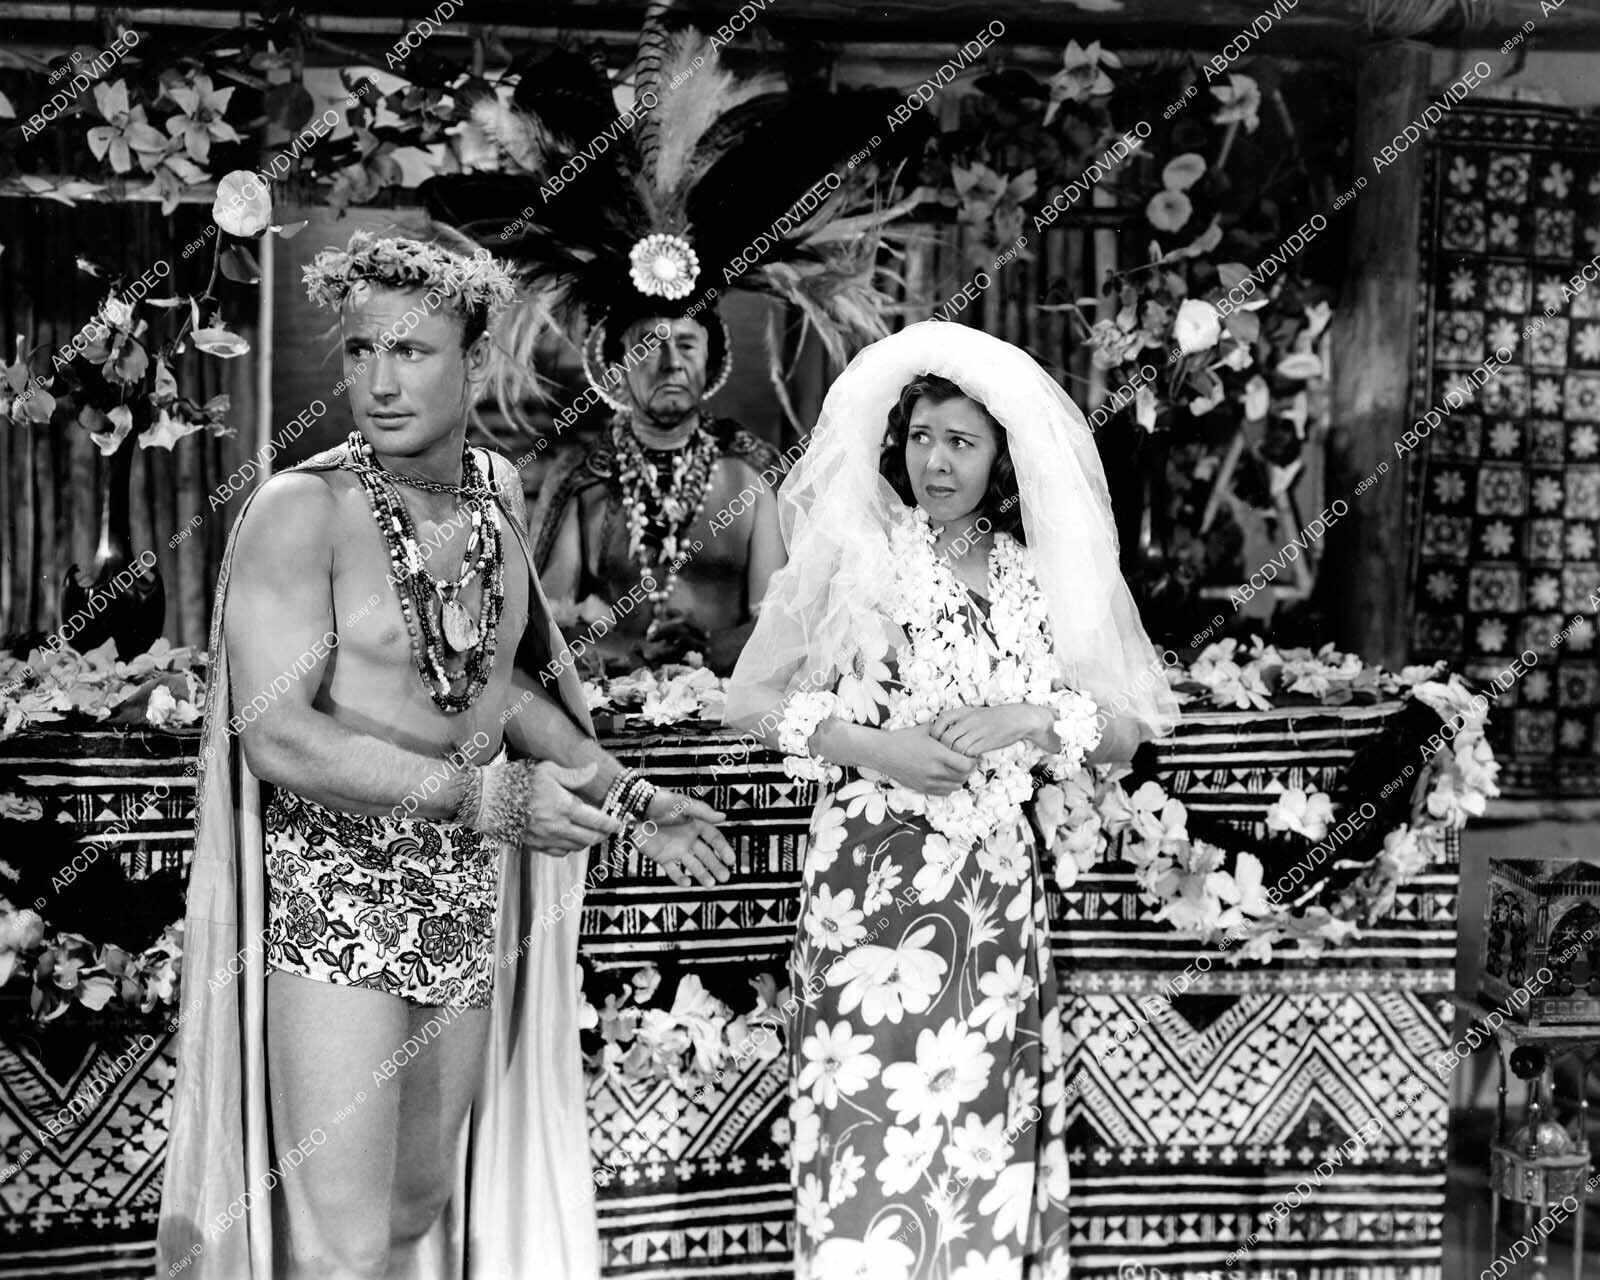 crp-29976 1944 Dave O'Brien, Mary Treen, Clyde Fillmore film Tahiti Nights crp-2